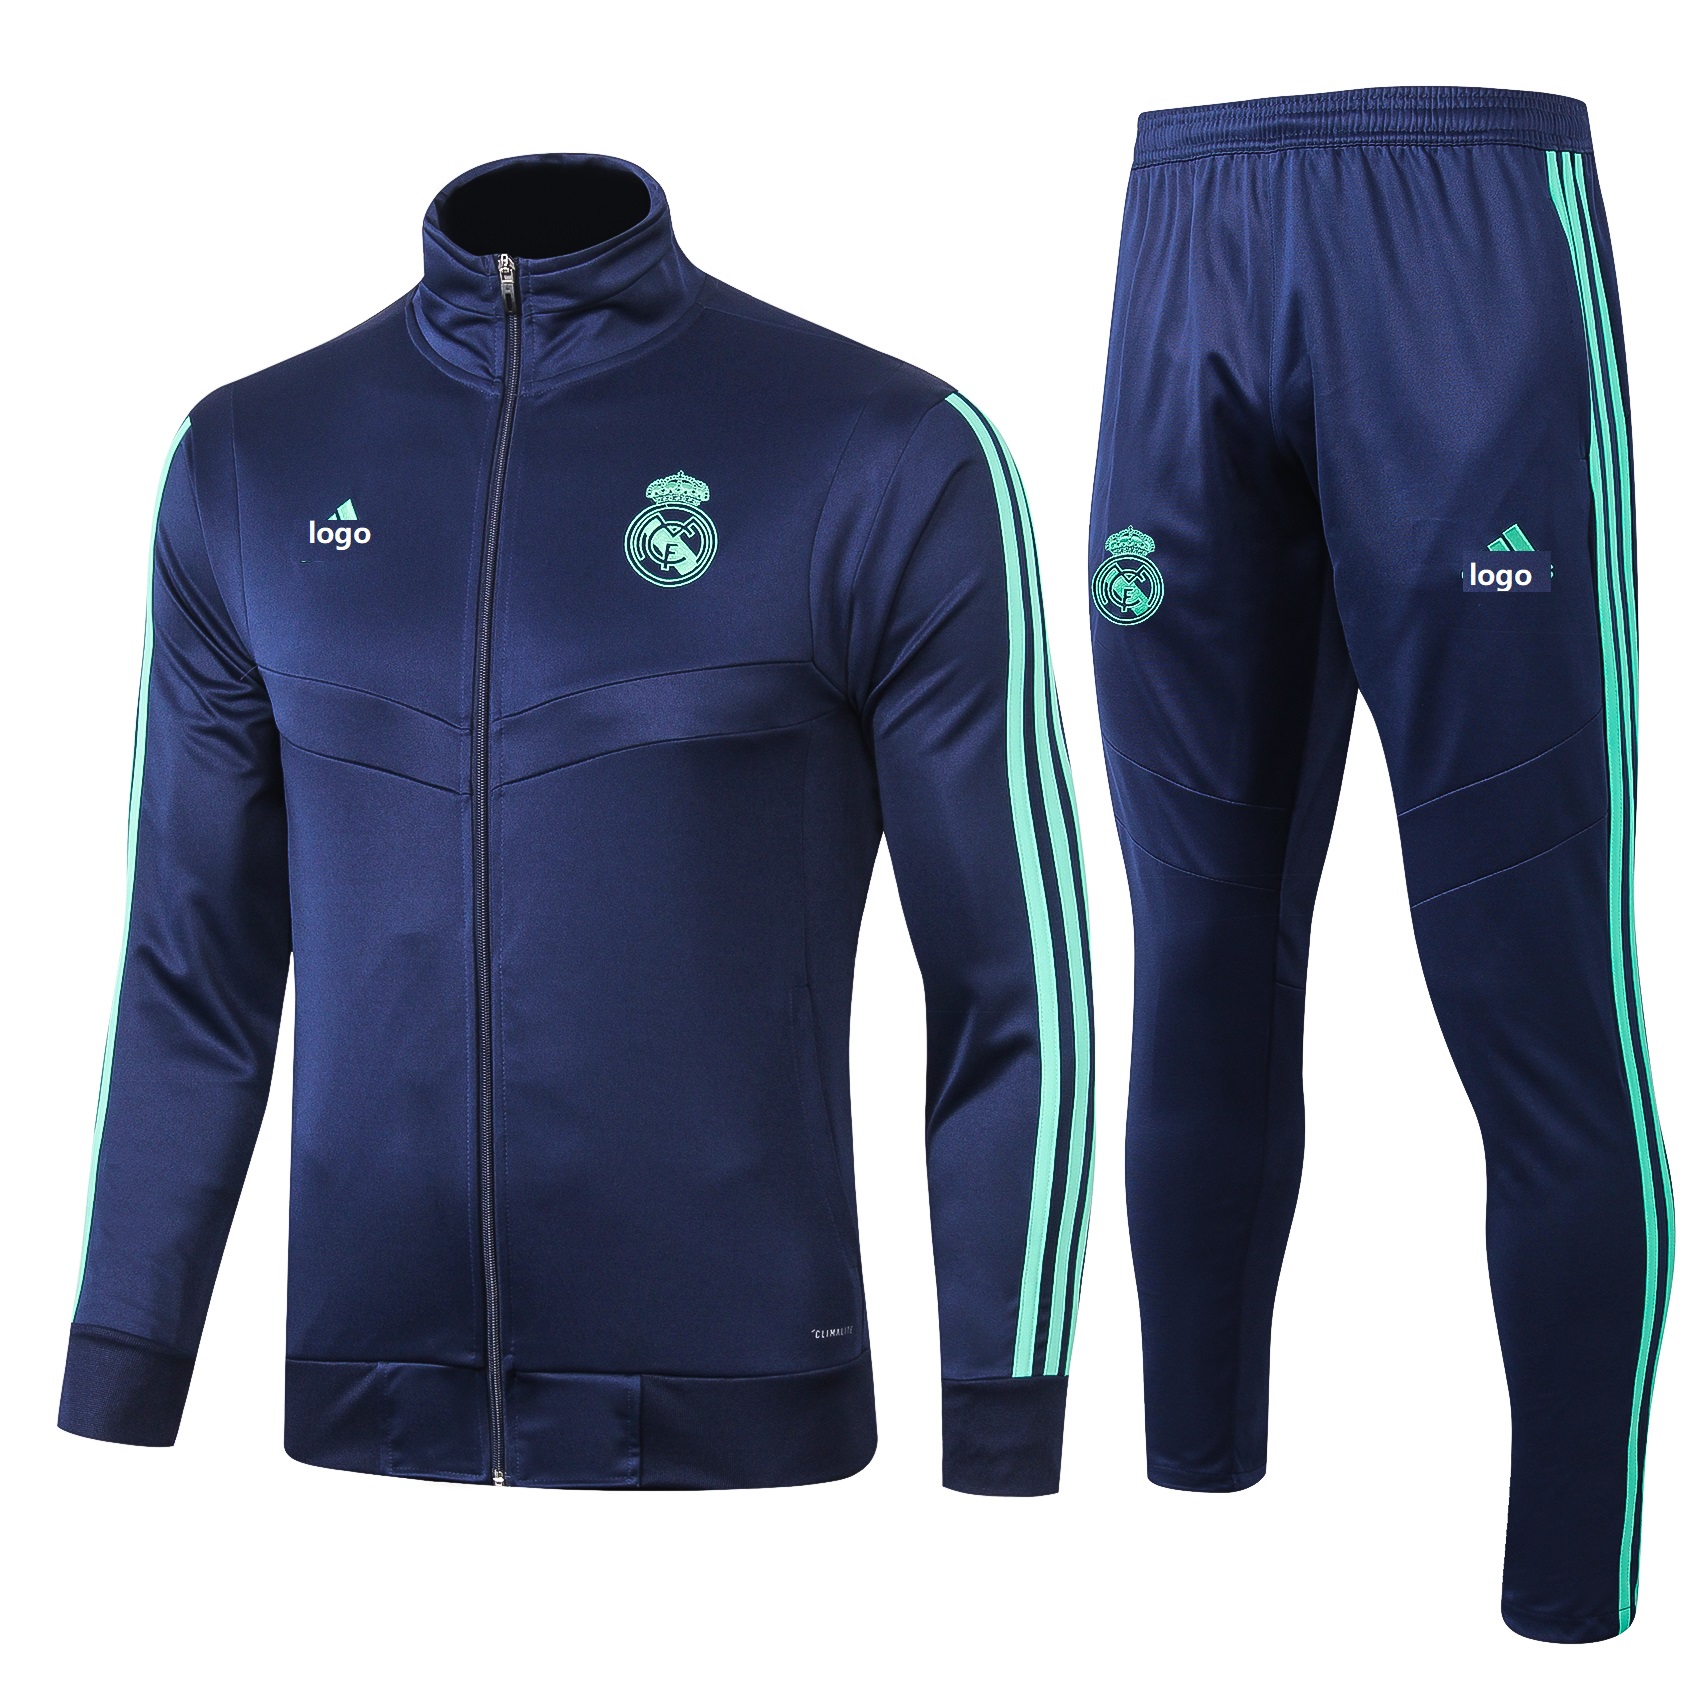 19-20 Adult real madrid royal blue jacket soccer uniforms football kits